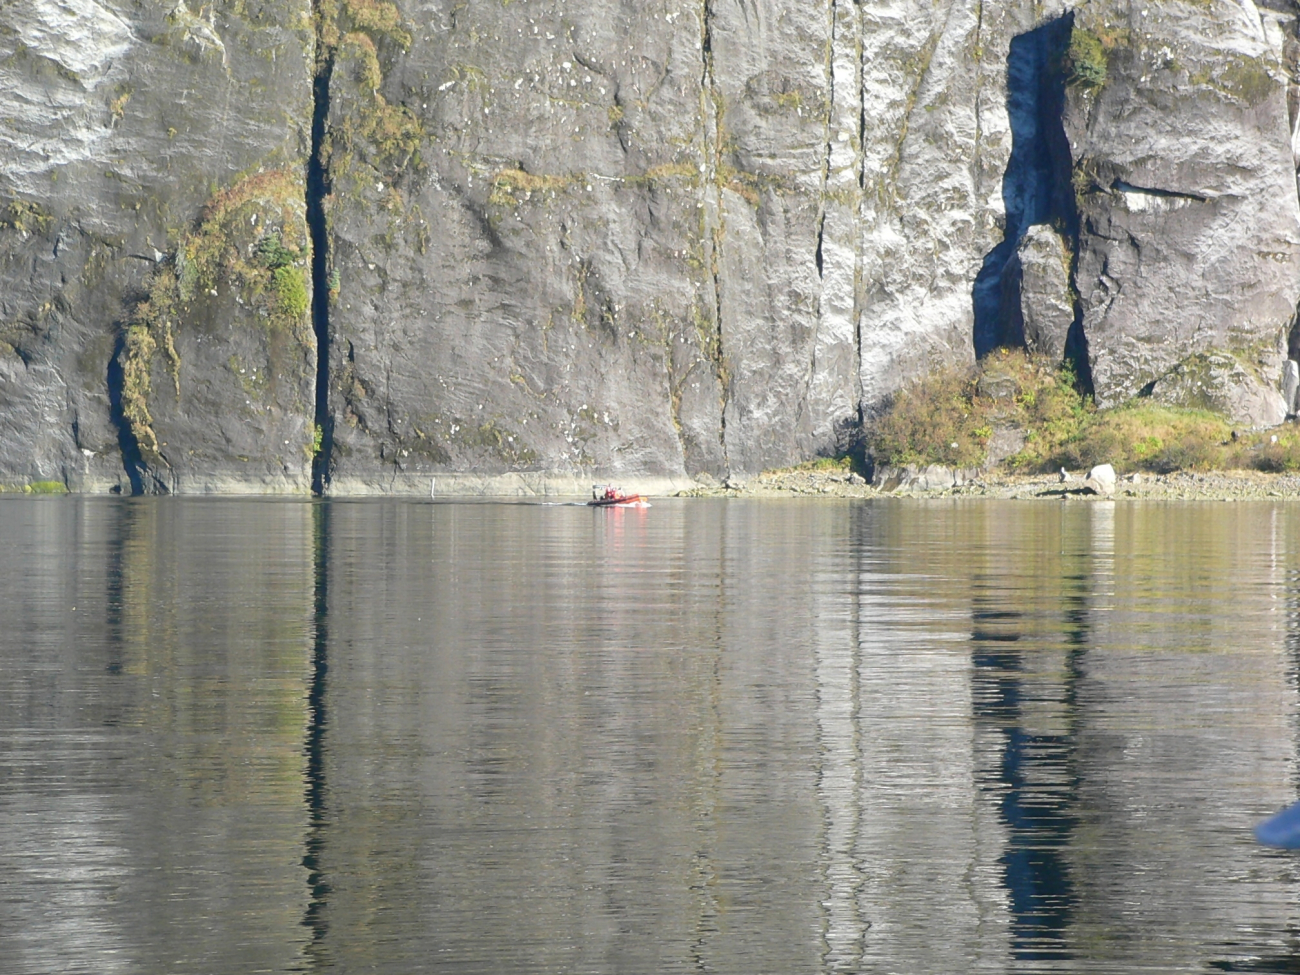 FAIRWEATHER's rigid-hull-inflatable boat (RHIB) dwarfed by the cliffs inRudyerd Bay area